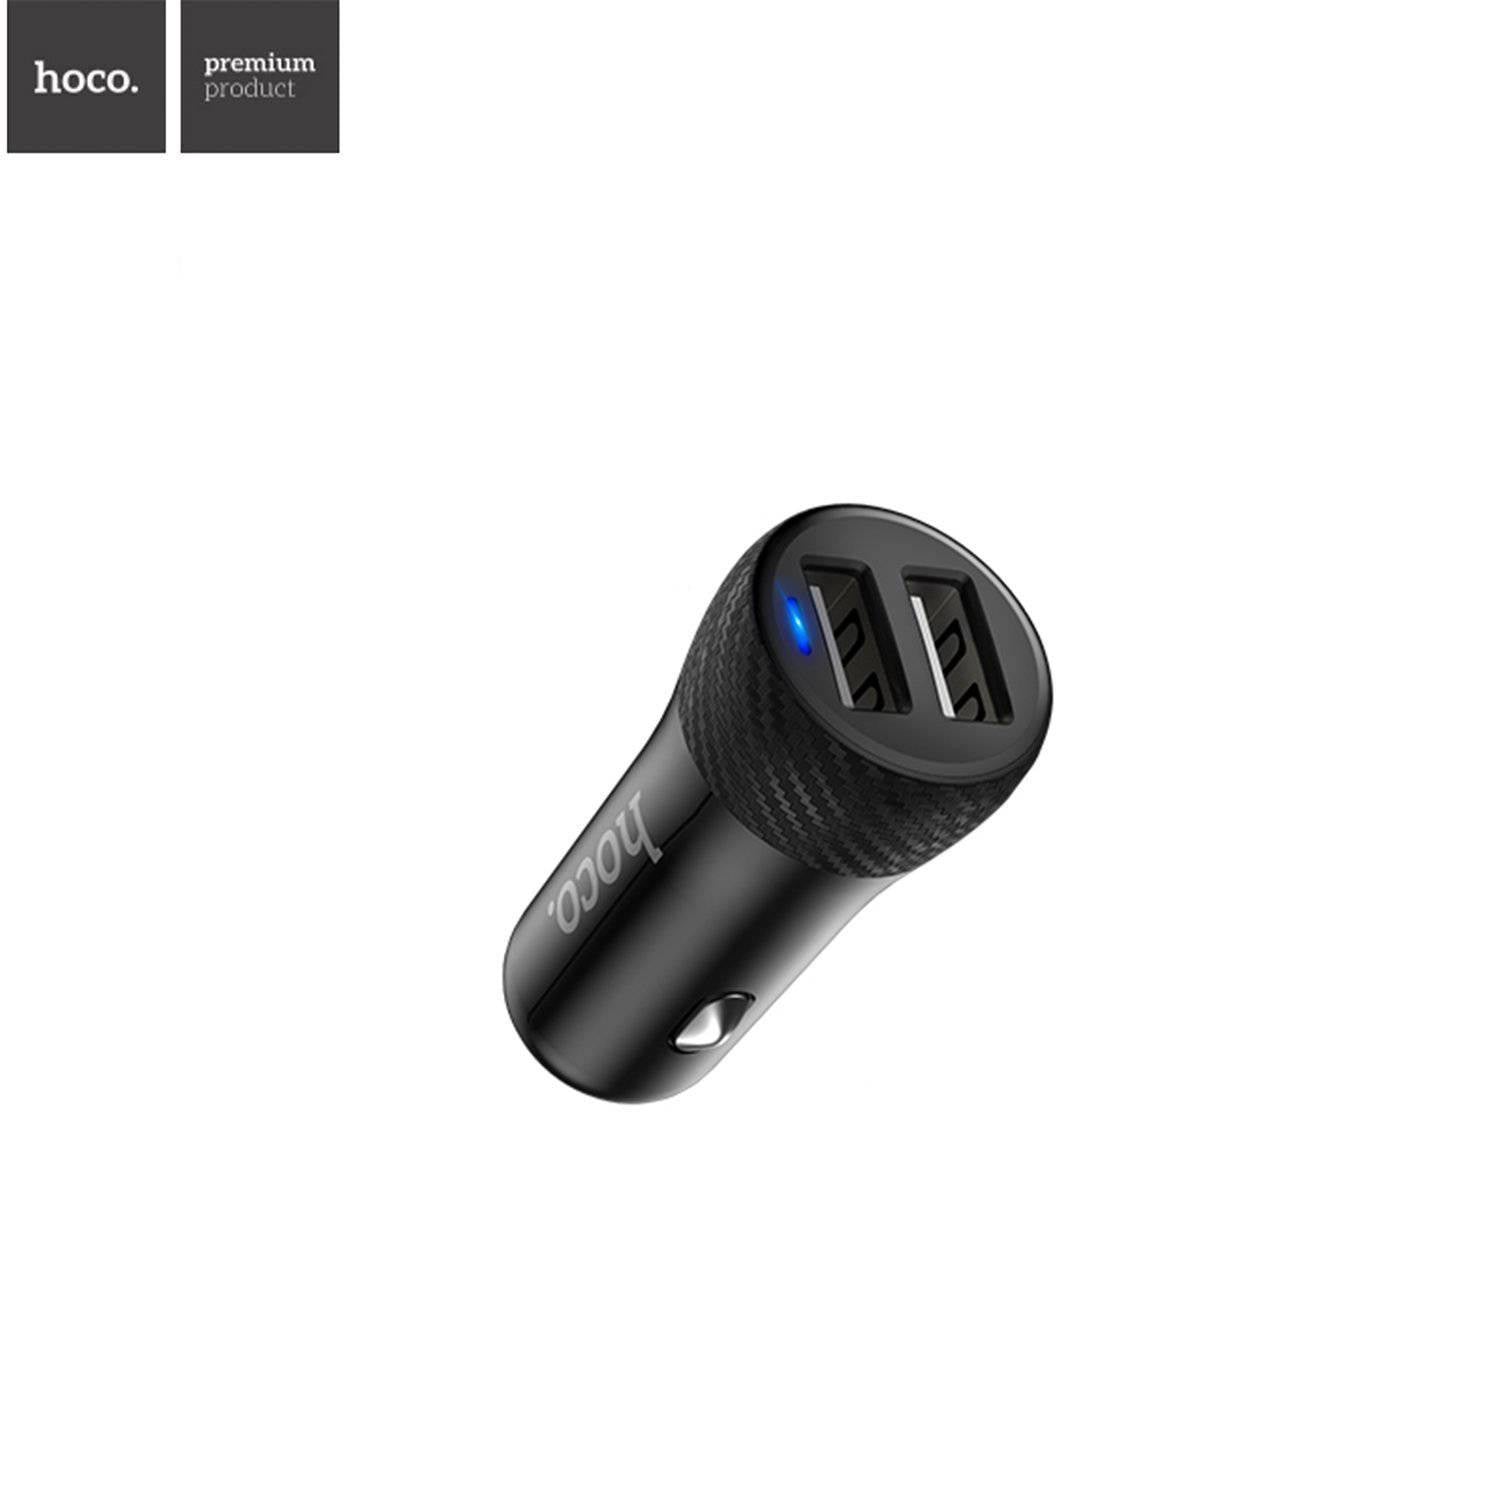 hoco. Car charger «Z21 Ascender» dual USB 3.4A | Shopna Online Store .